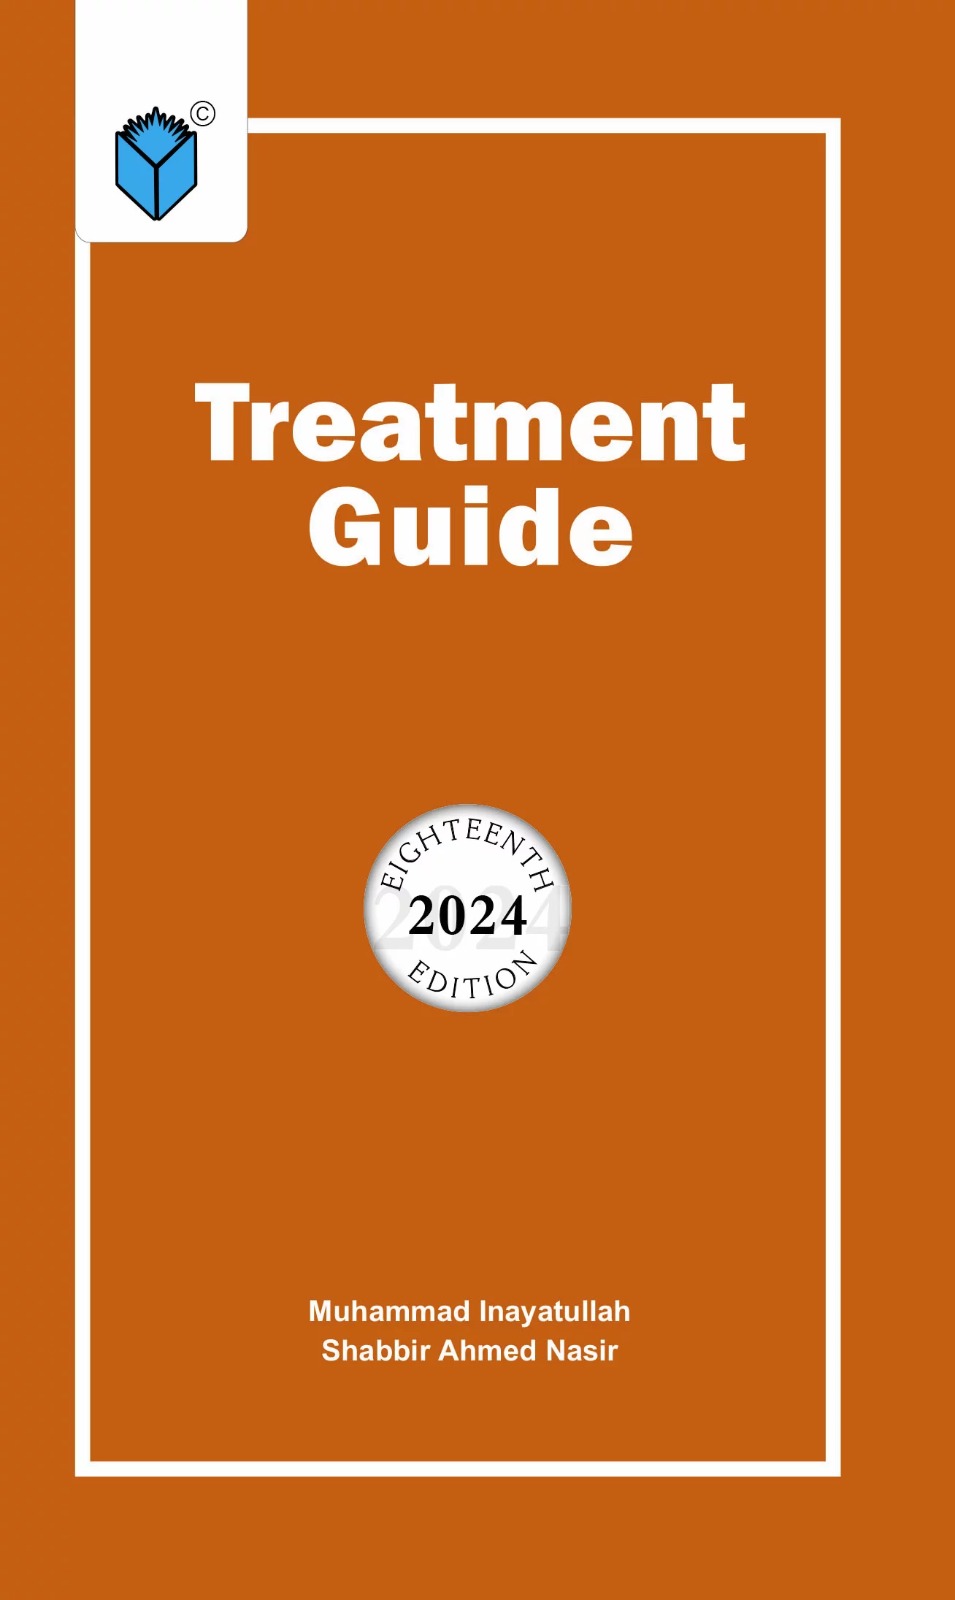 TREATMENT GUIDE 2024, 18e